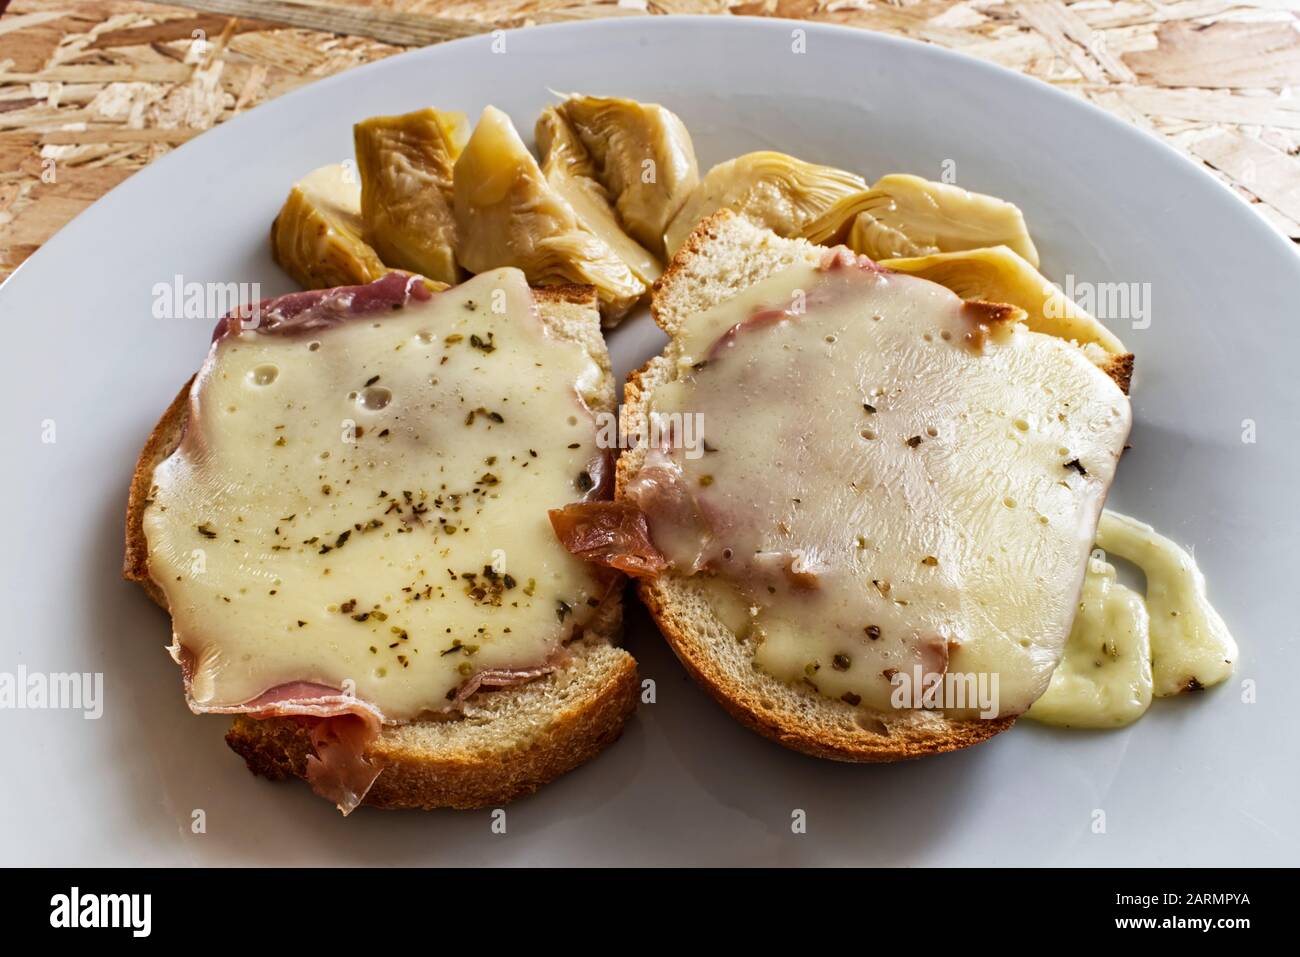 Bruschetta with cheese, ham, origan, olive oil. Artichoke salad. Stock Photo